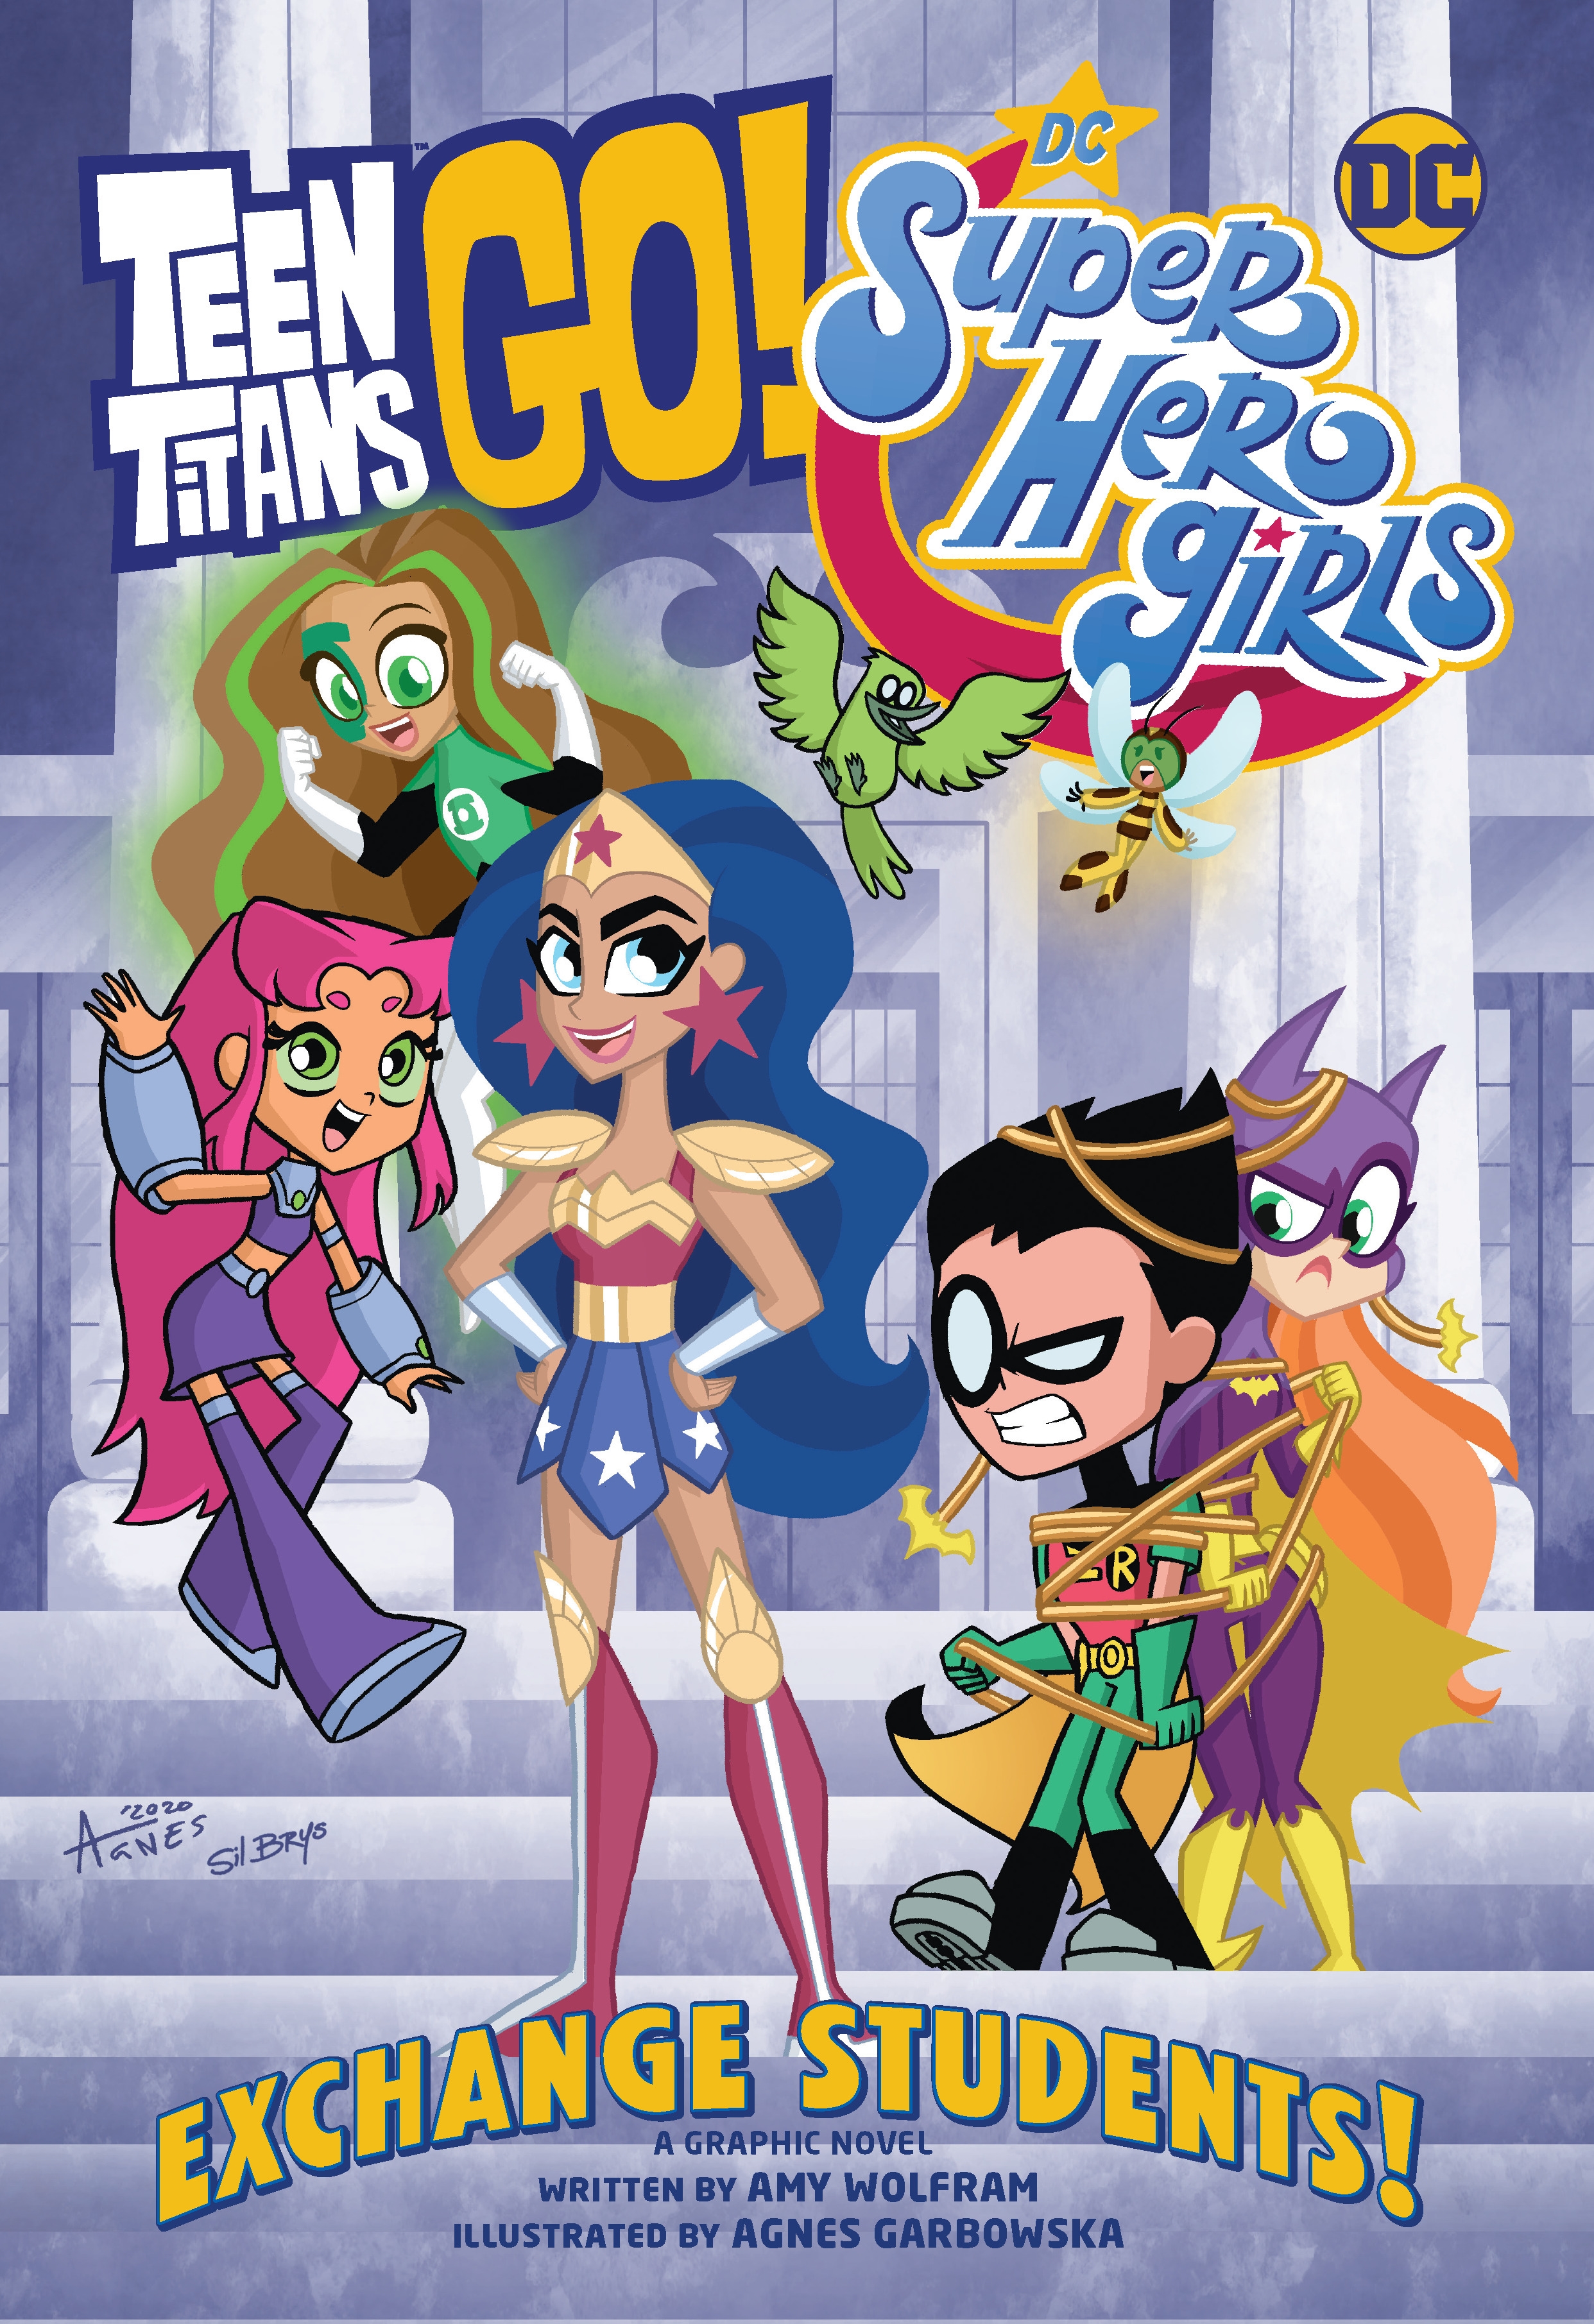 Teen Titans Go!/DC Super Hero Girls: Exchange Students! by Amy